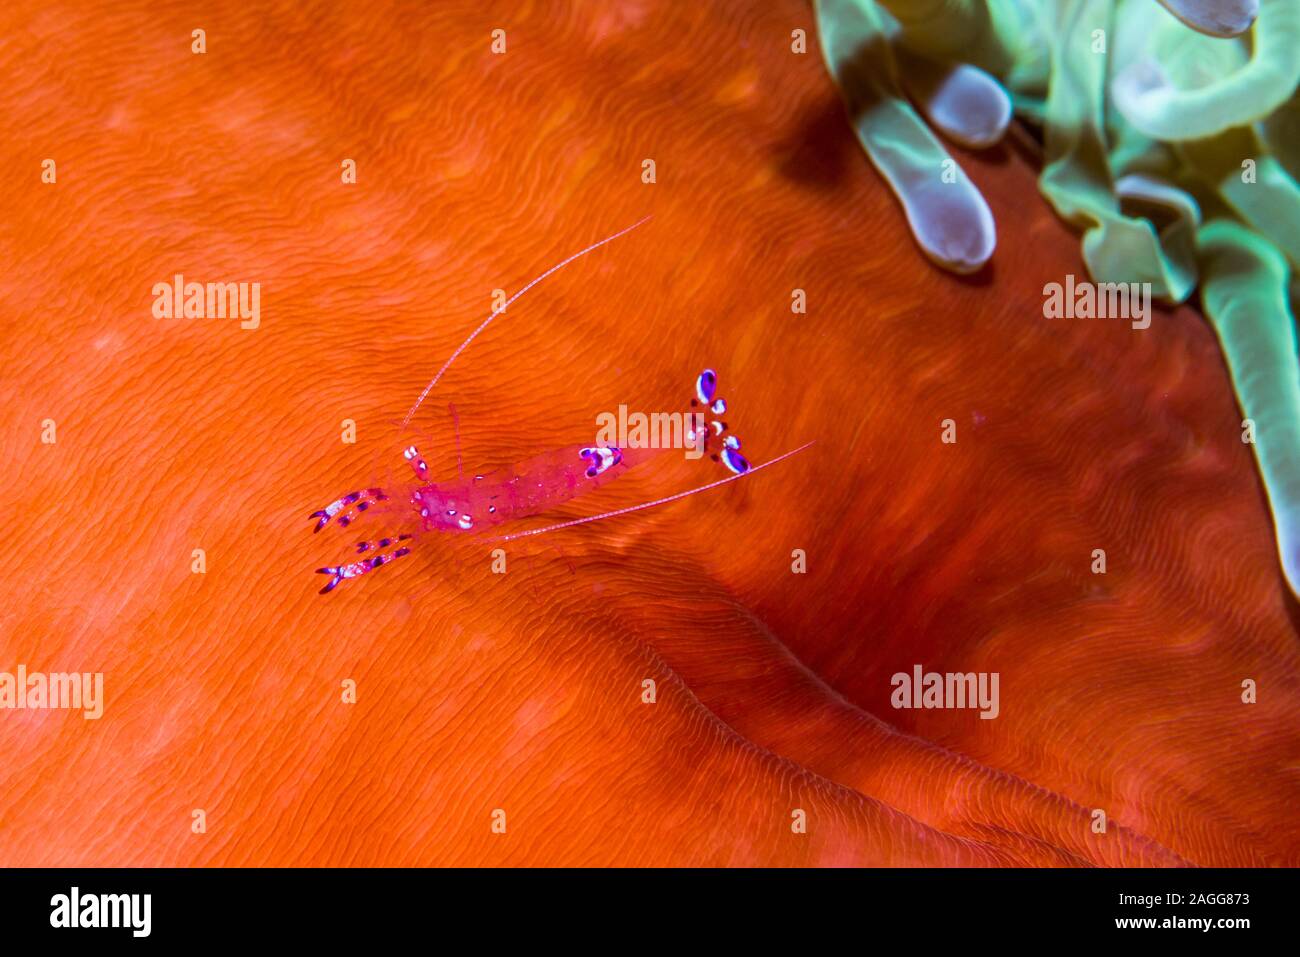 Sarasvati anemone shrimp [Ancylomenes sarasvati] on a Magnificent sea anemone [Heteractis magnifica].  North Sulawesi, Indonesia. Stock Photo